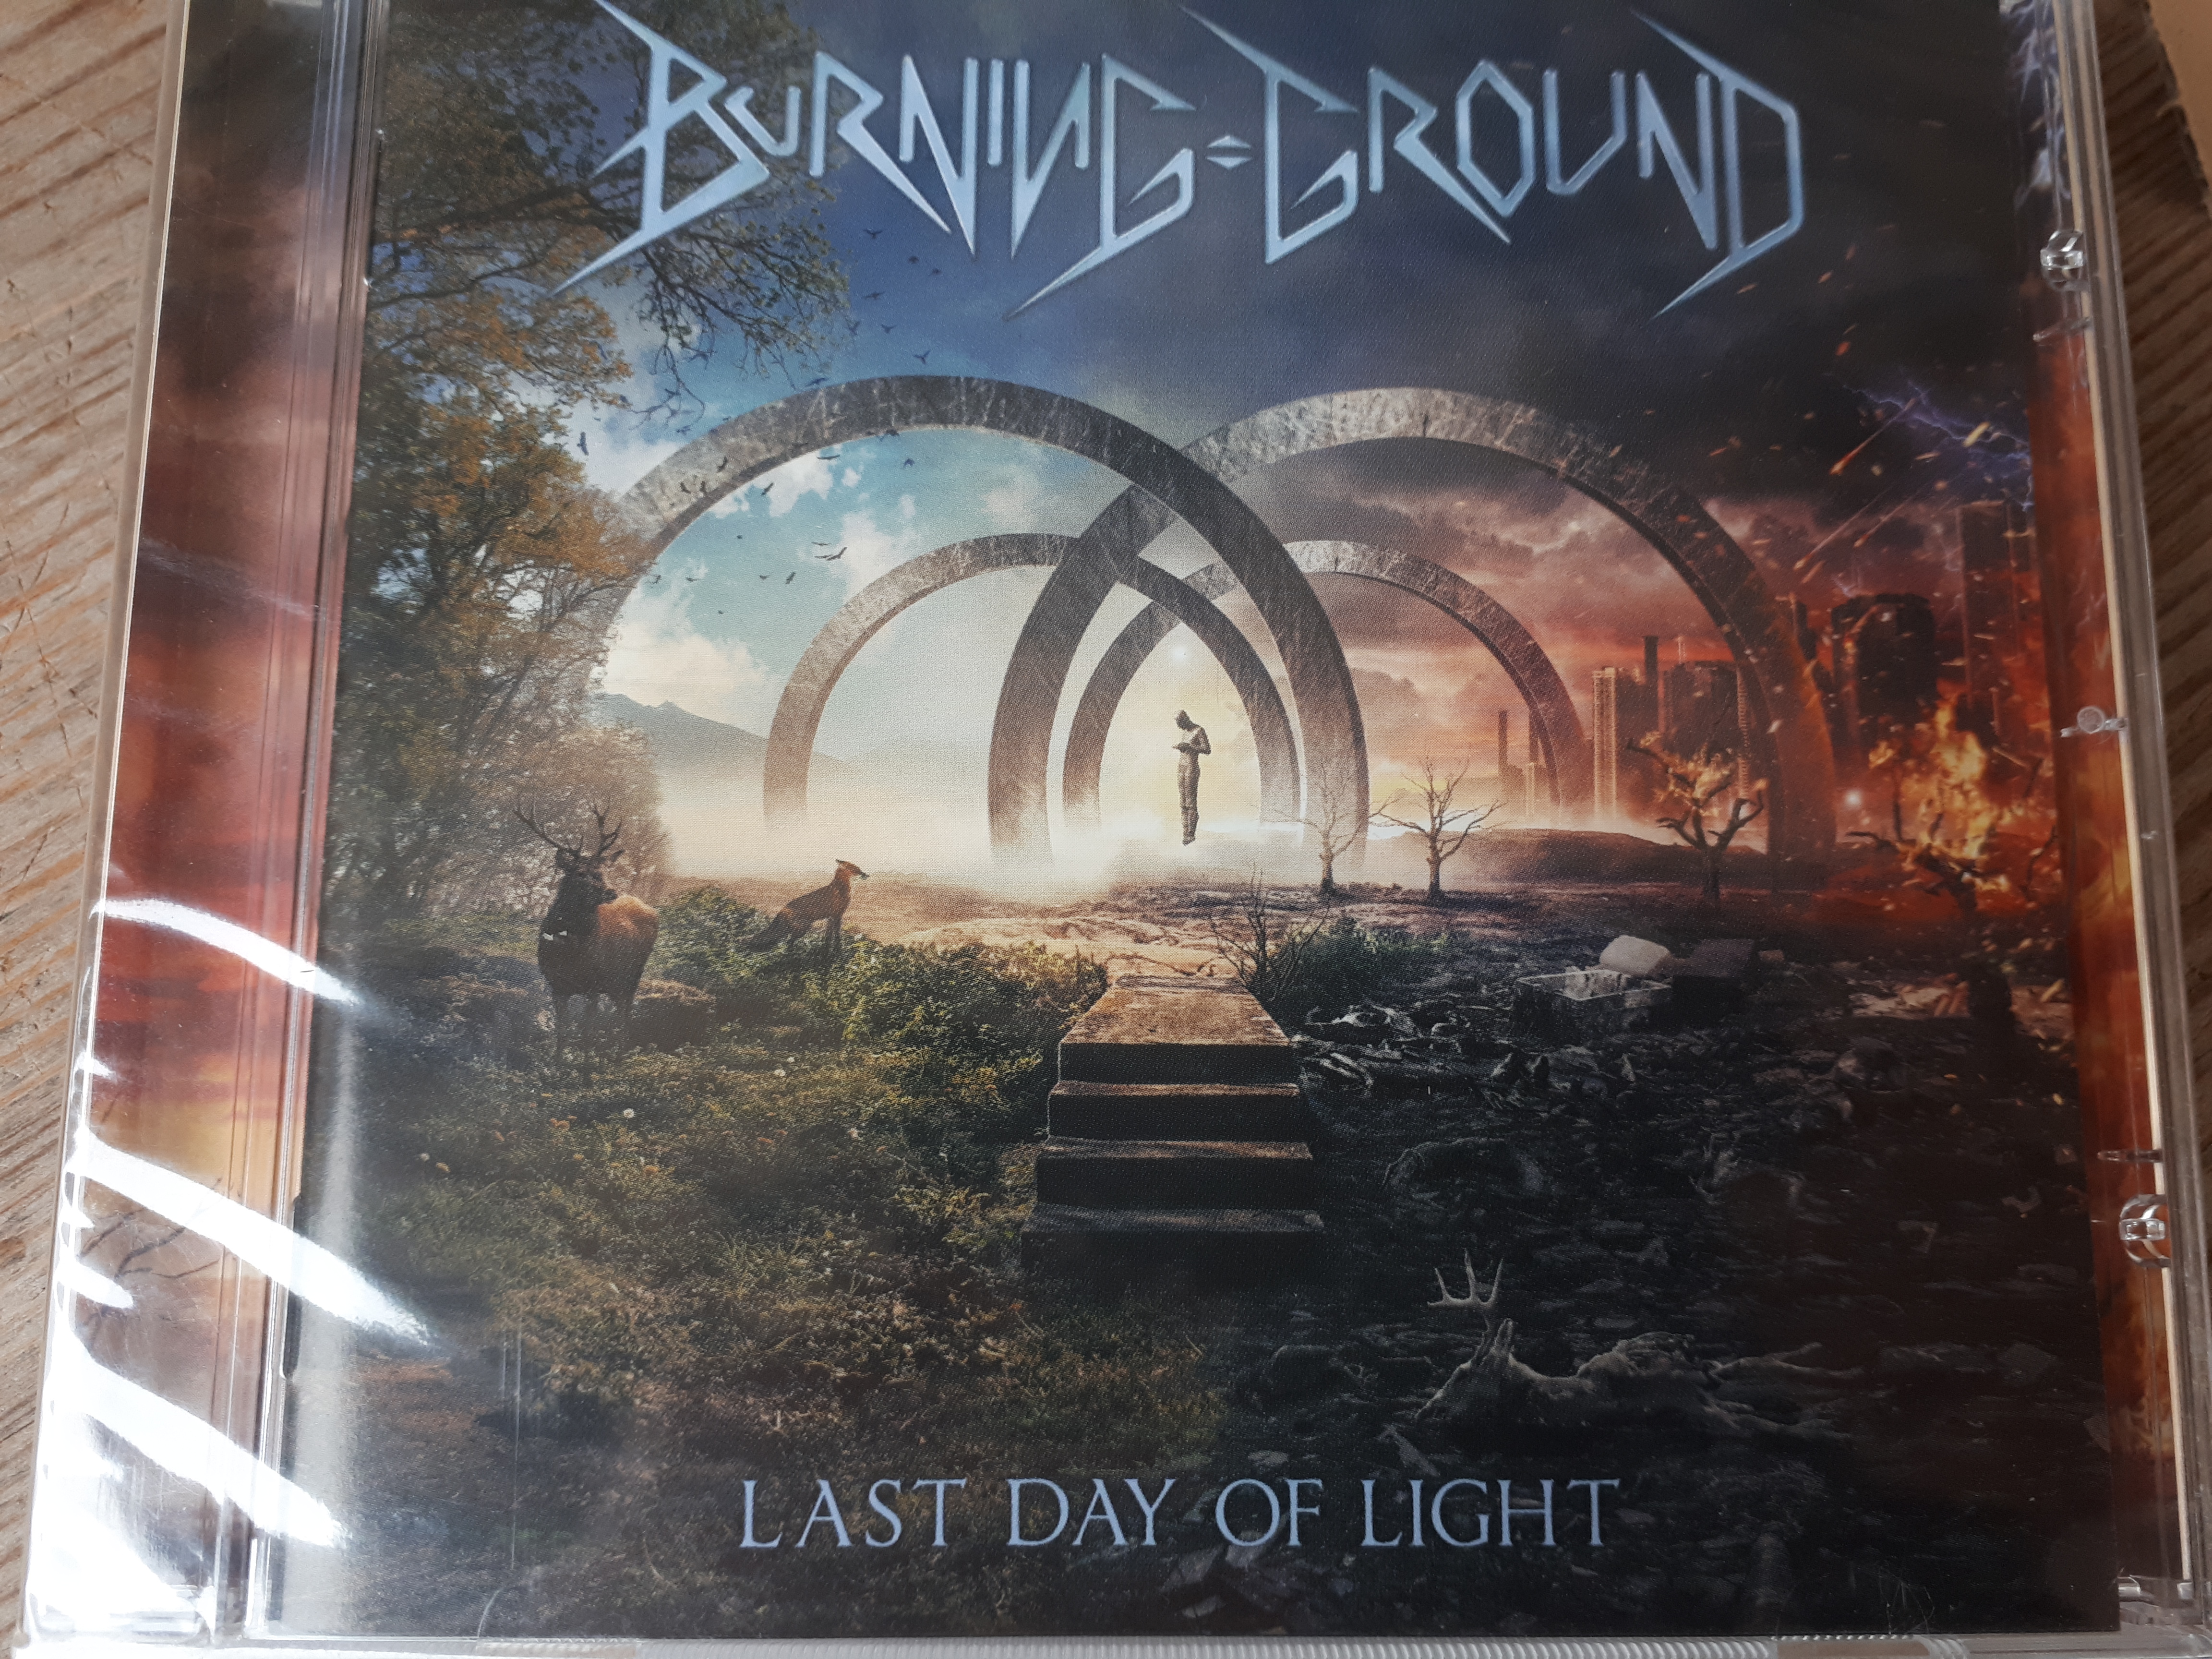 Burning Ground - Last day of light